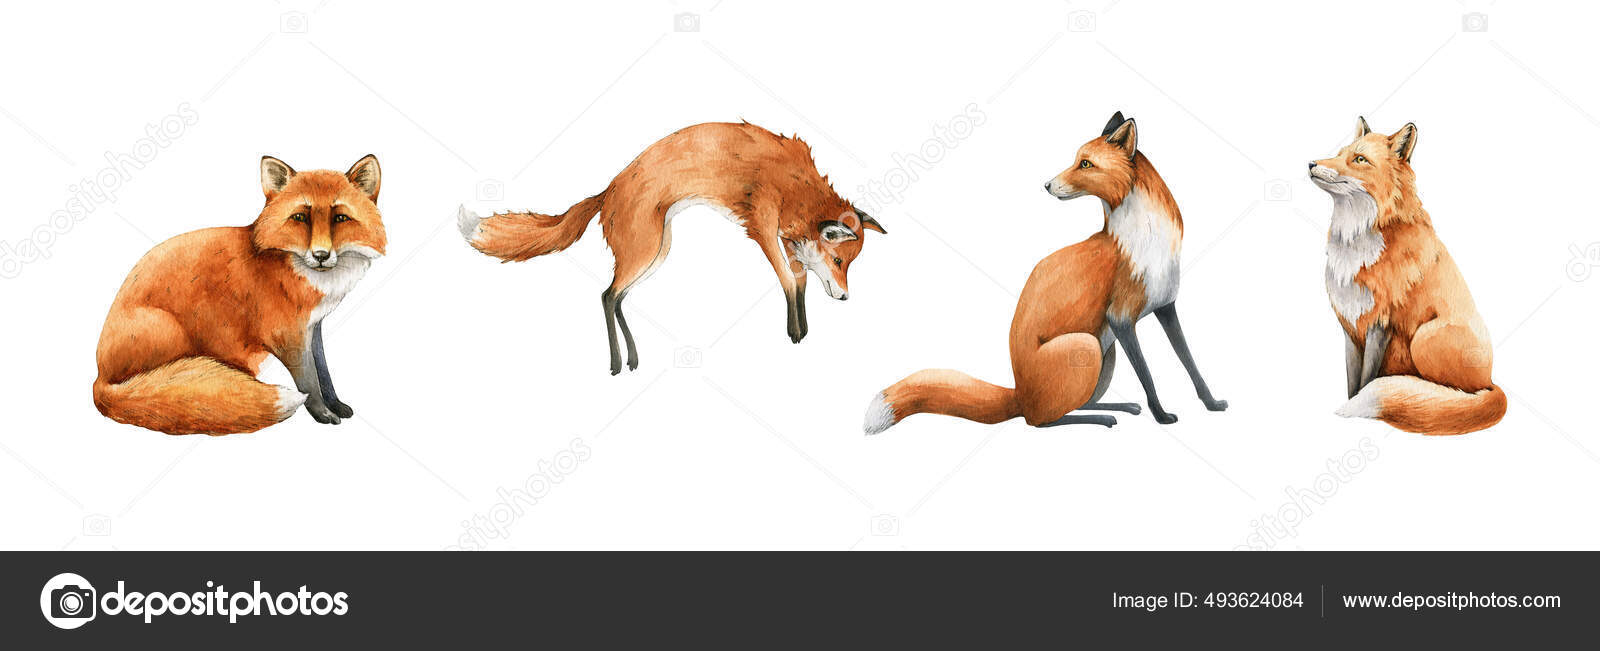 Fox animal set. Watercolor illustration. Wild cute red fox